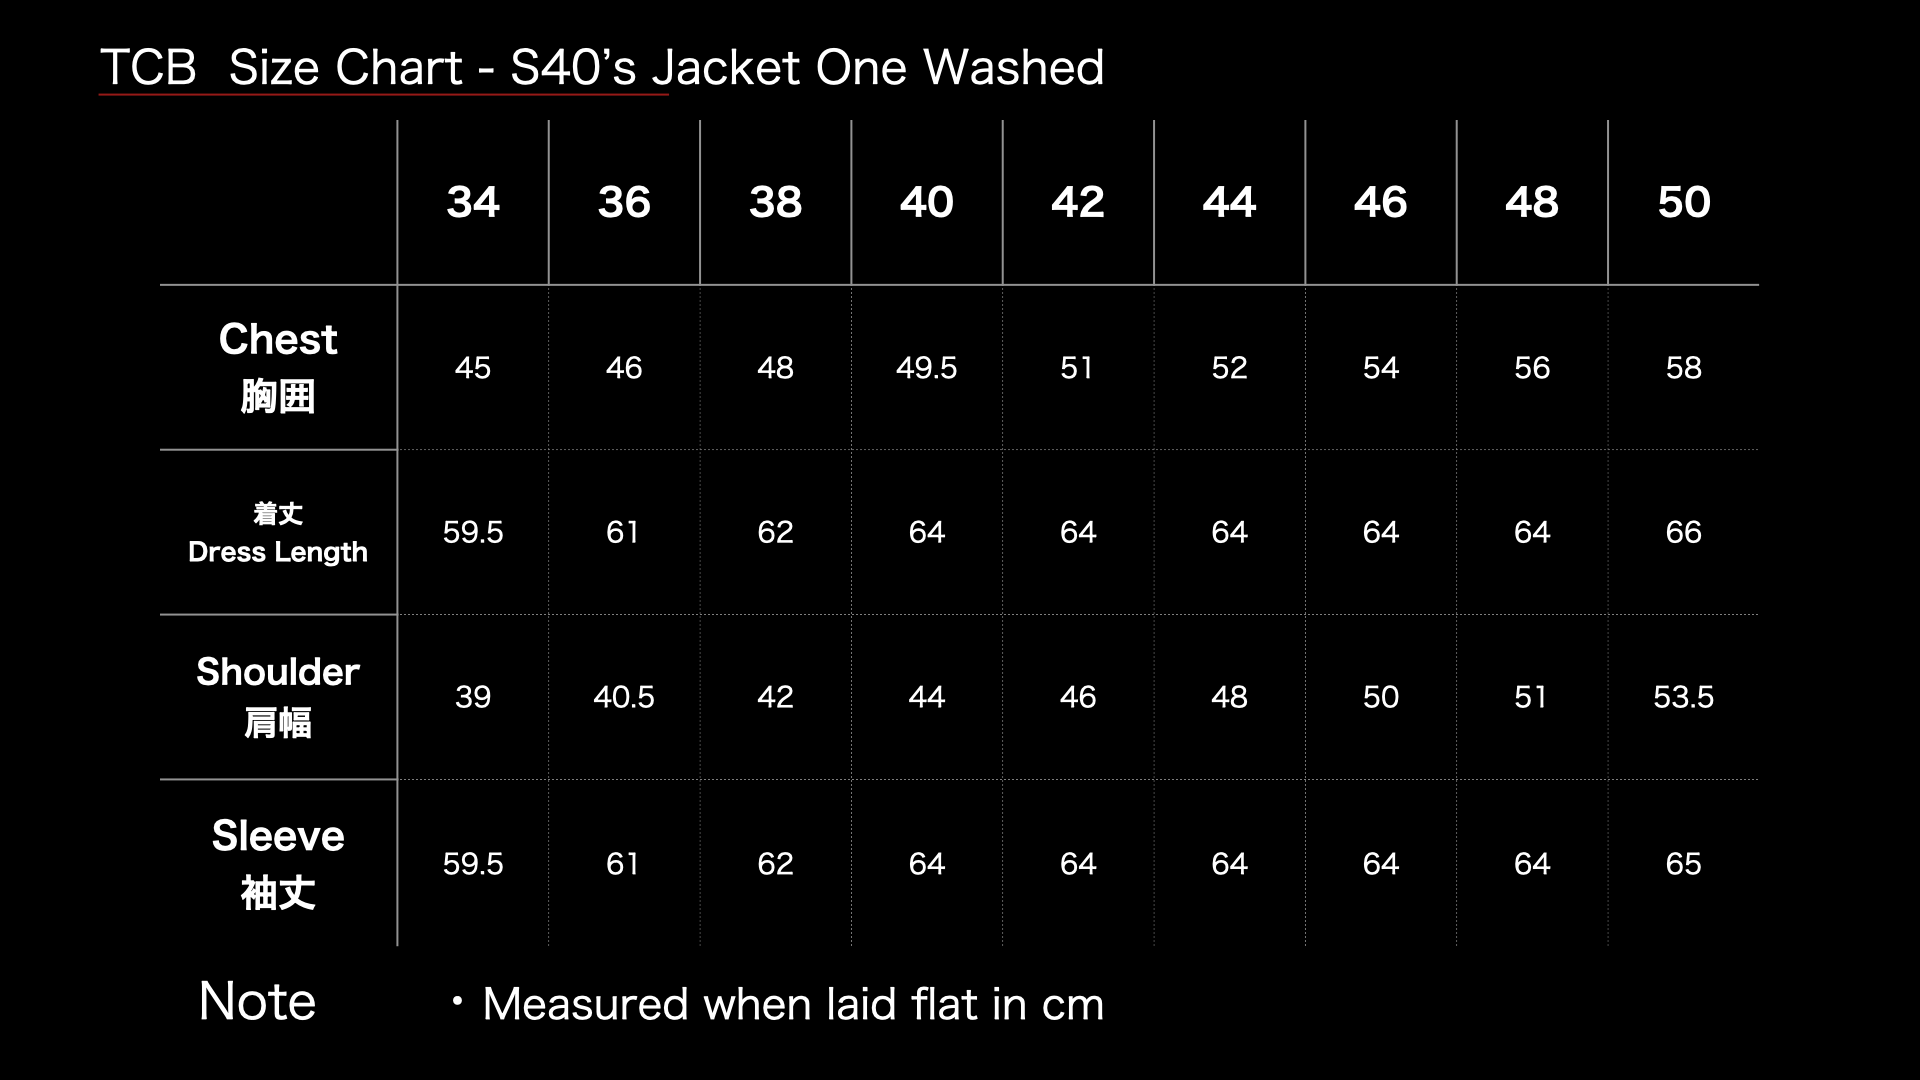 S40's Jacket